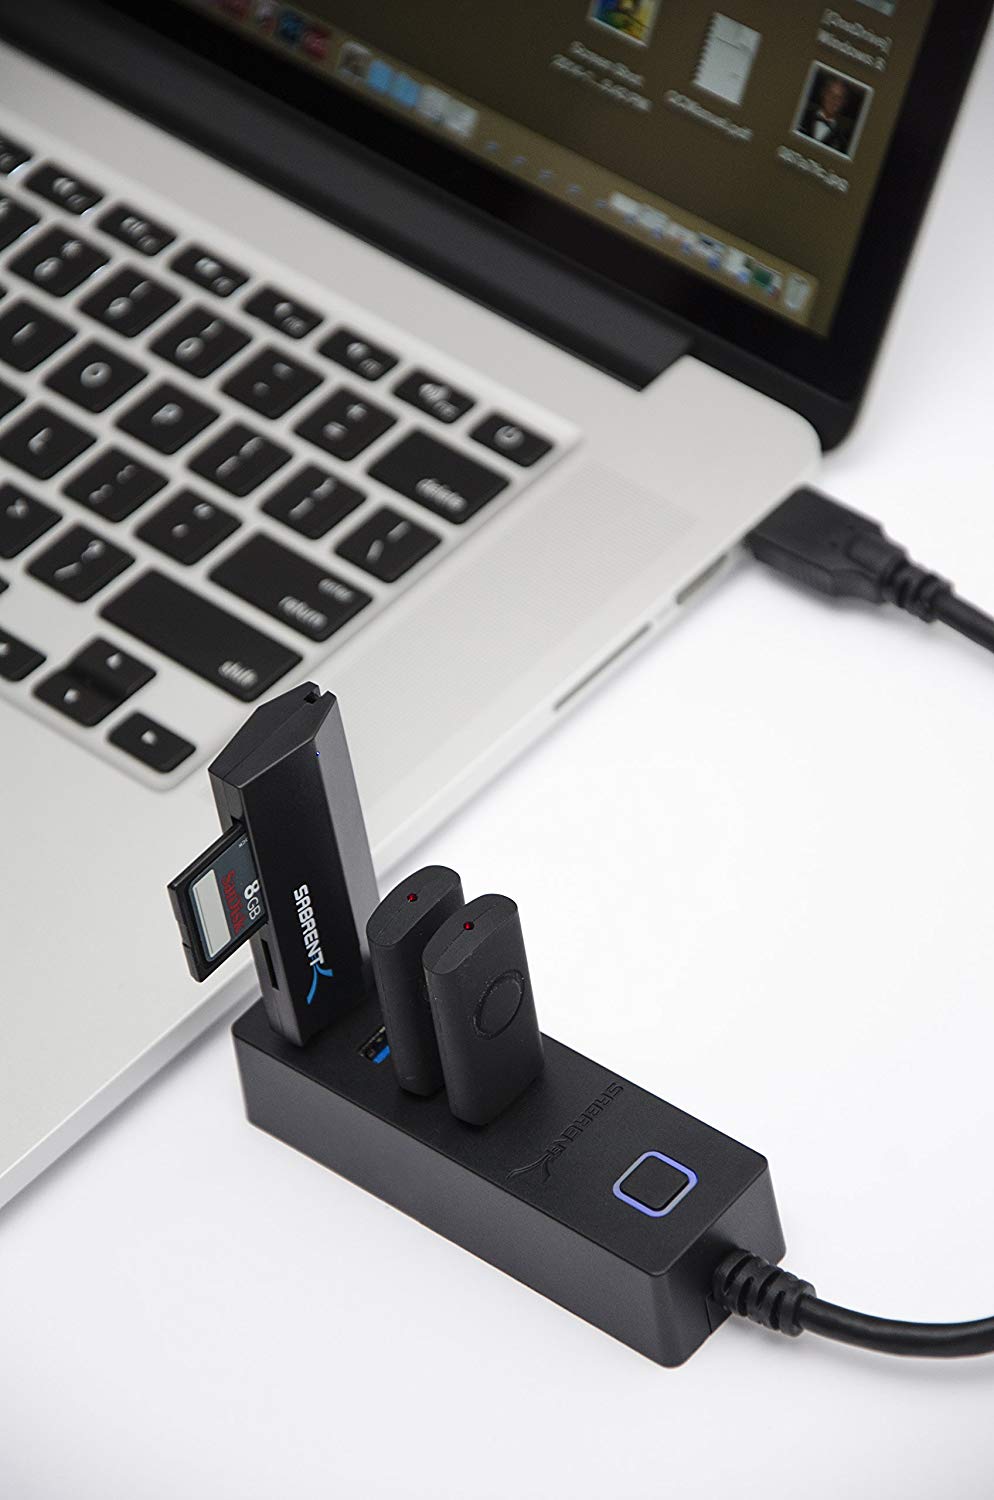 4 Port Portable USB 3.0 Hub with Power Switch